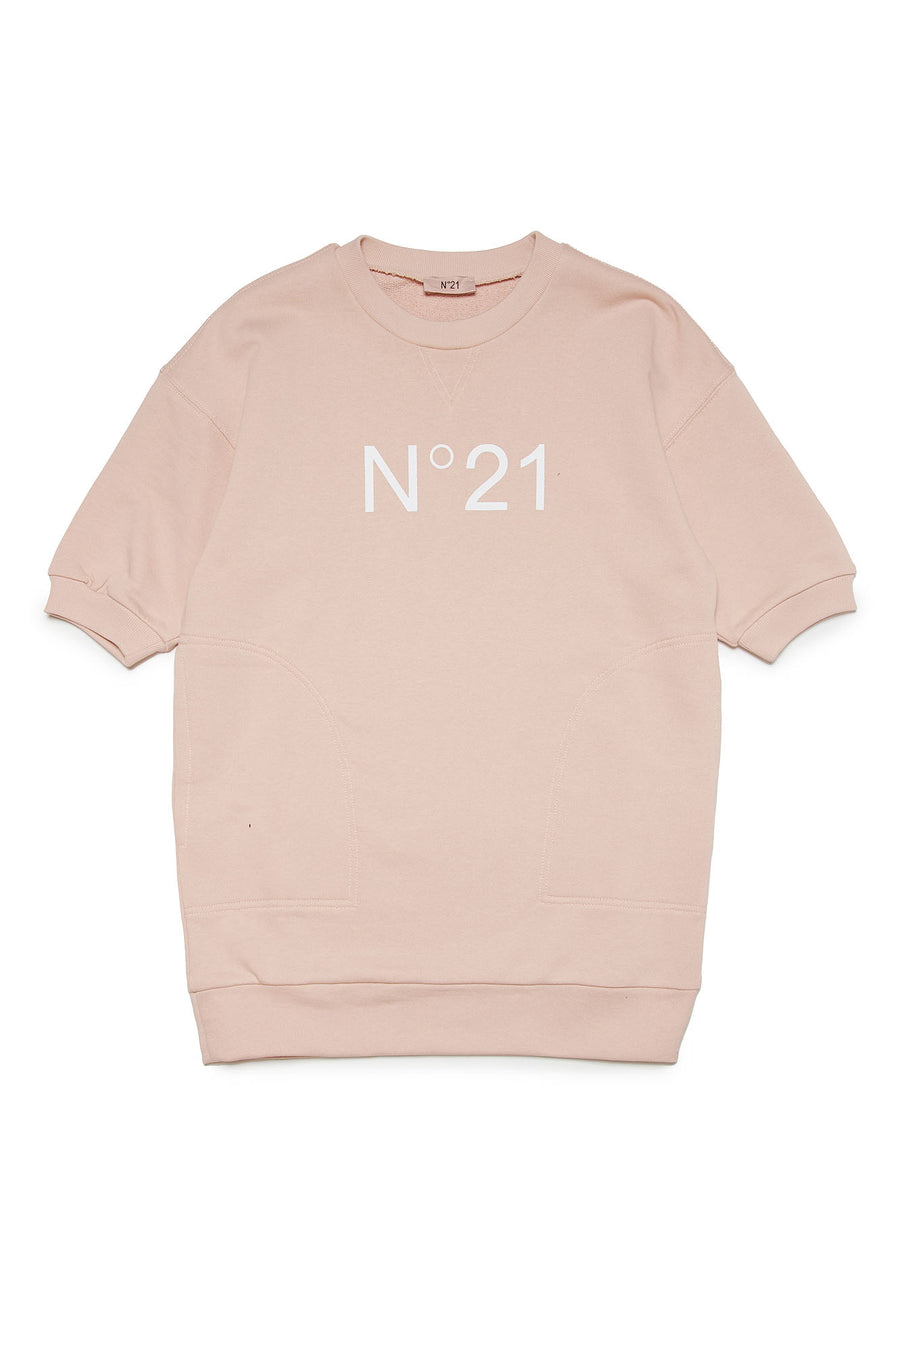 N21 Brand luxury children's clothing– Flying Colors